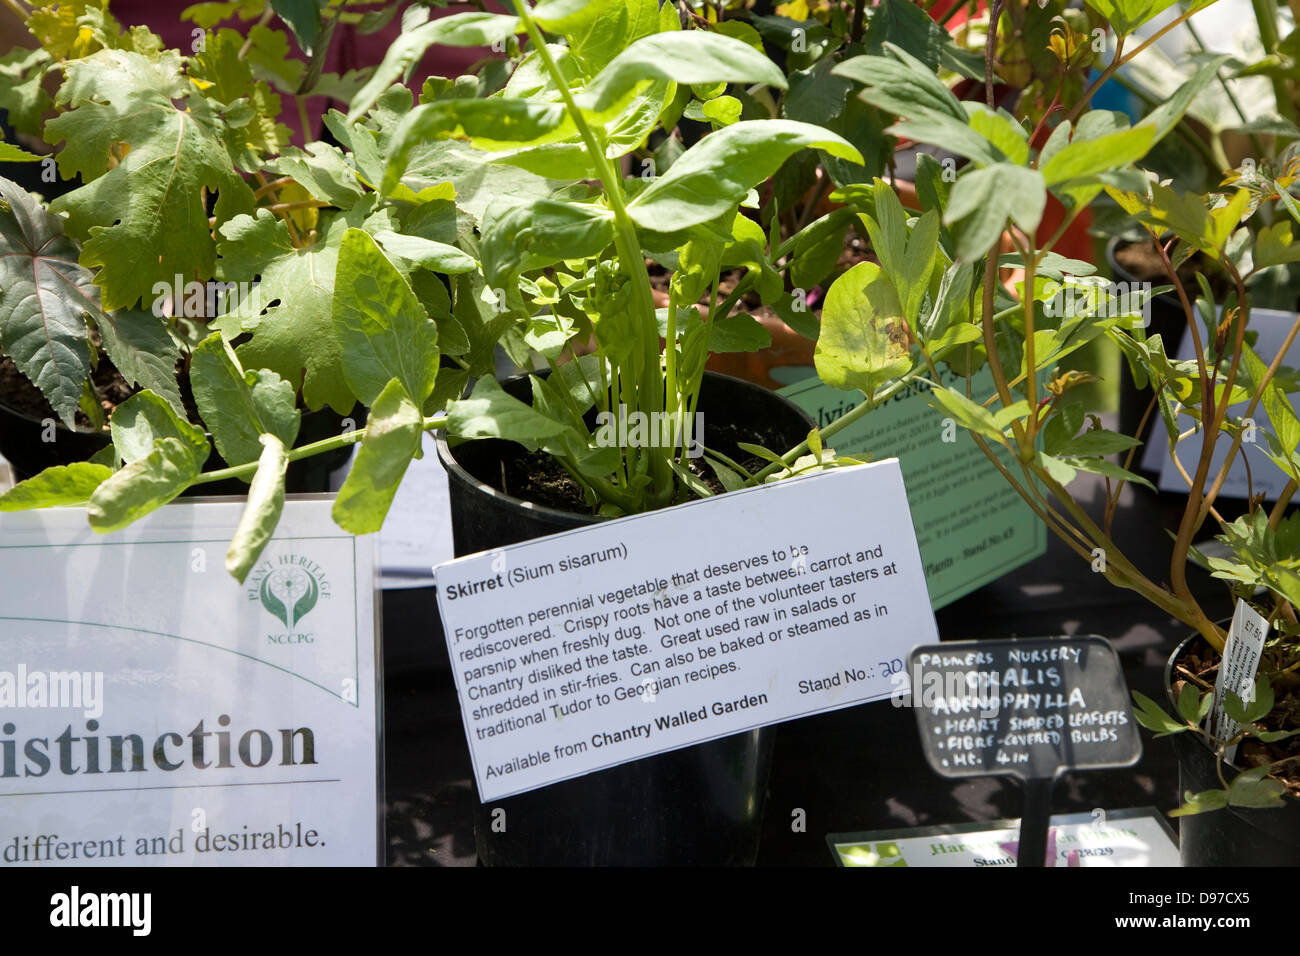 Skirret, sium sisarum, plant close up with information label Stock Photo